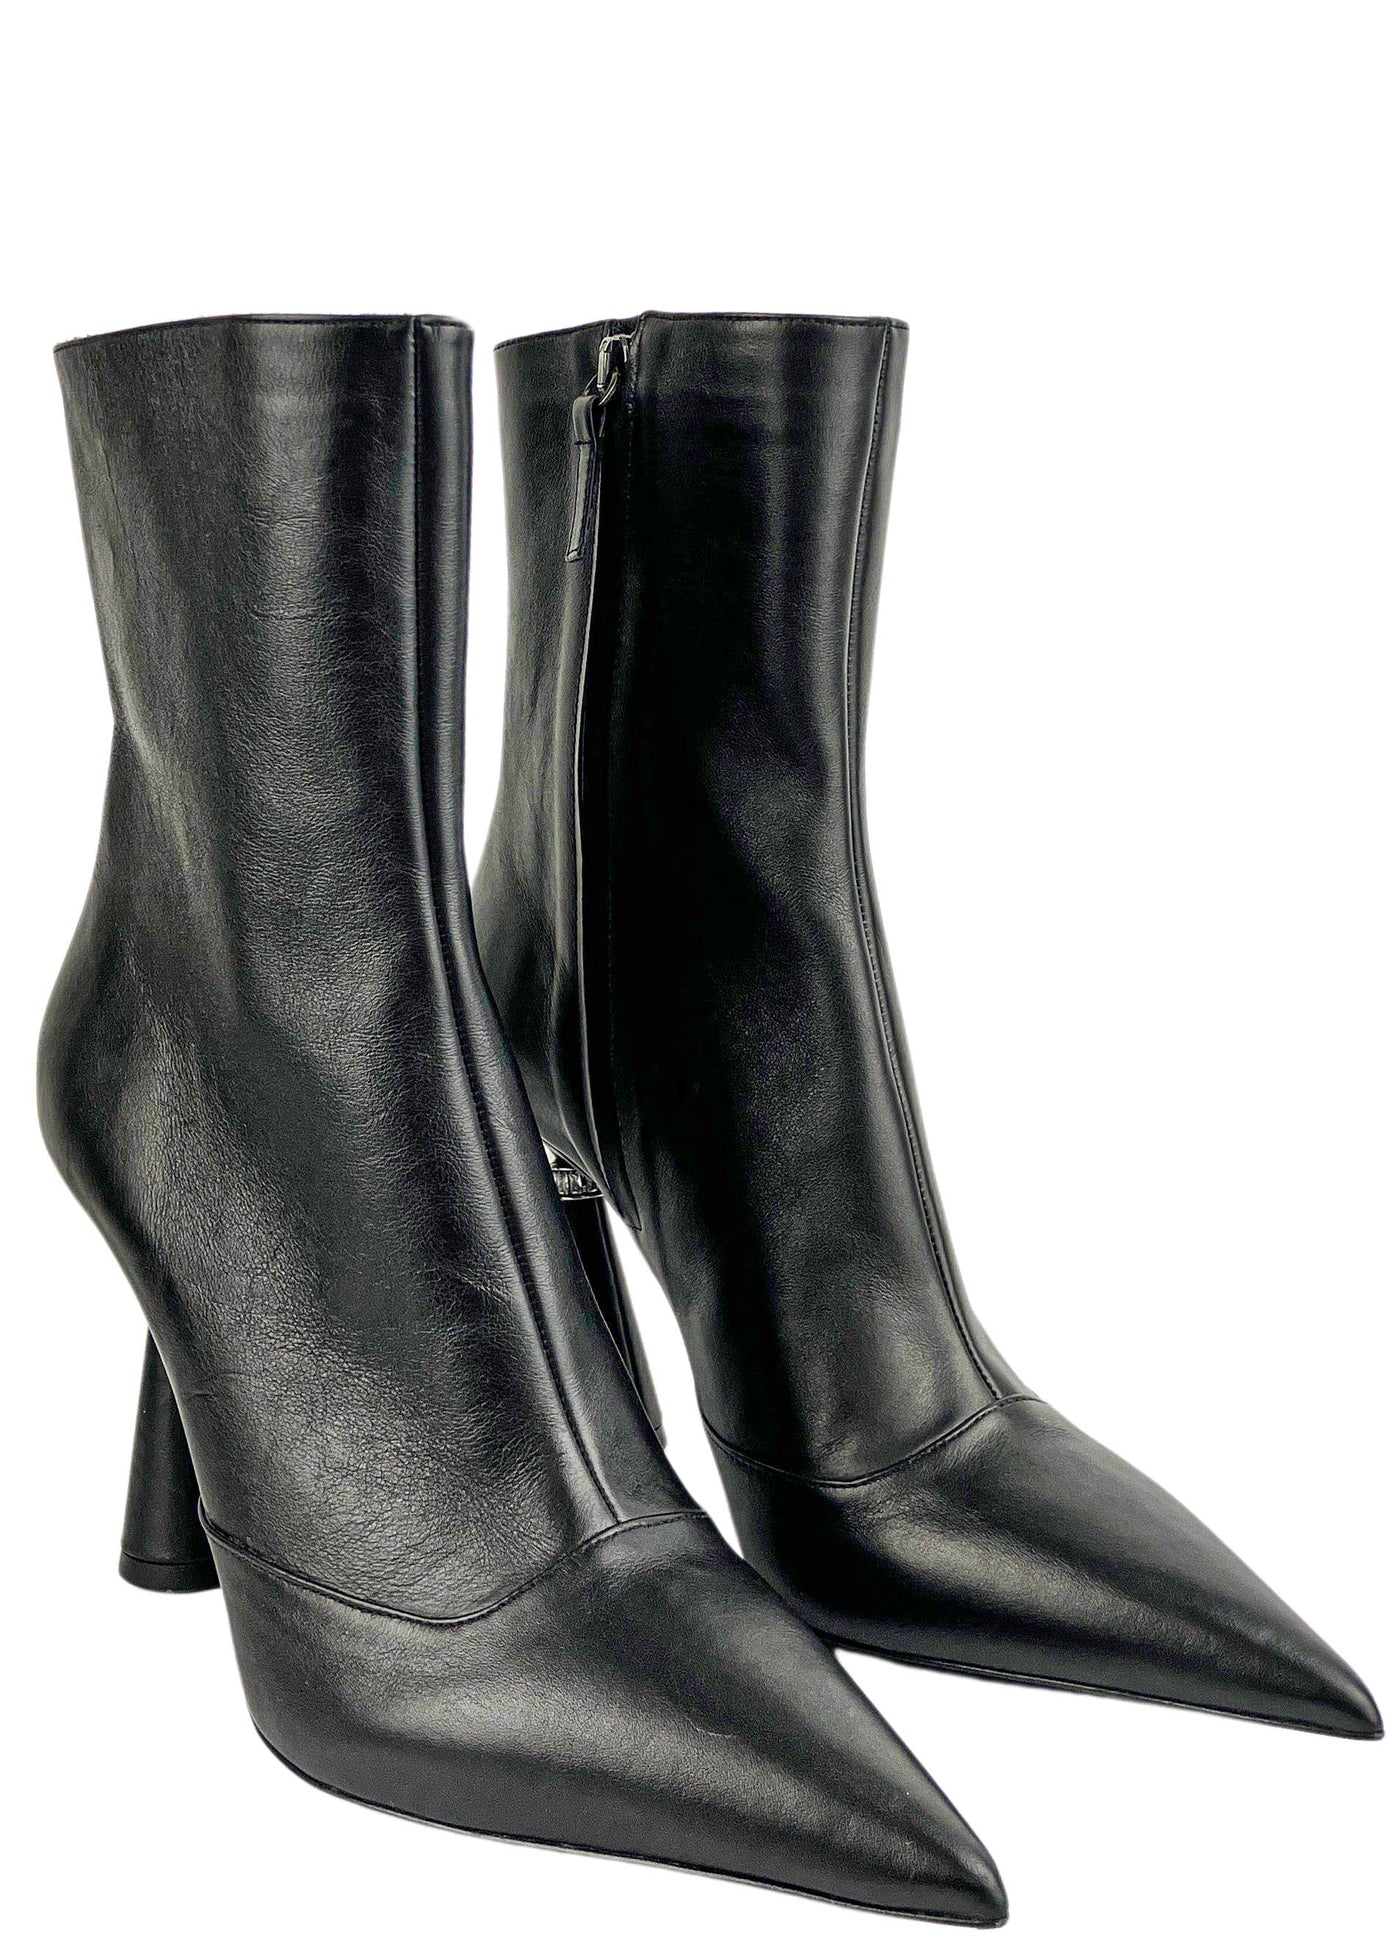 D'Accori Haze Crystal Heel  Boots in Pure Black - Discounts on D'Accori at UAL